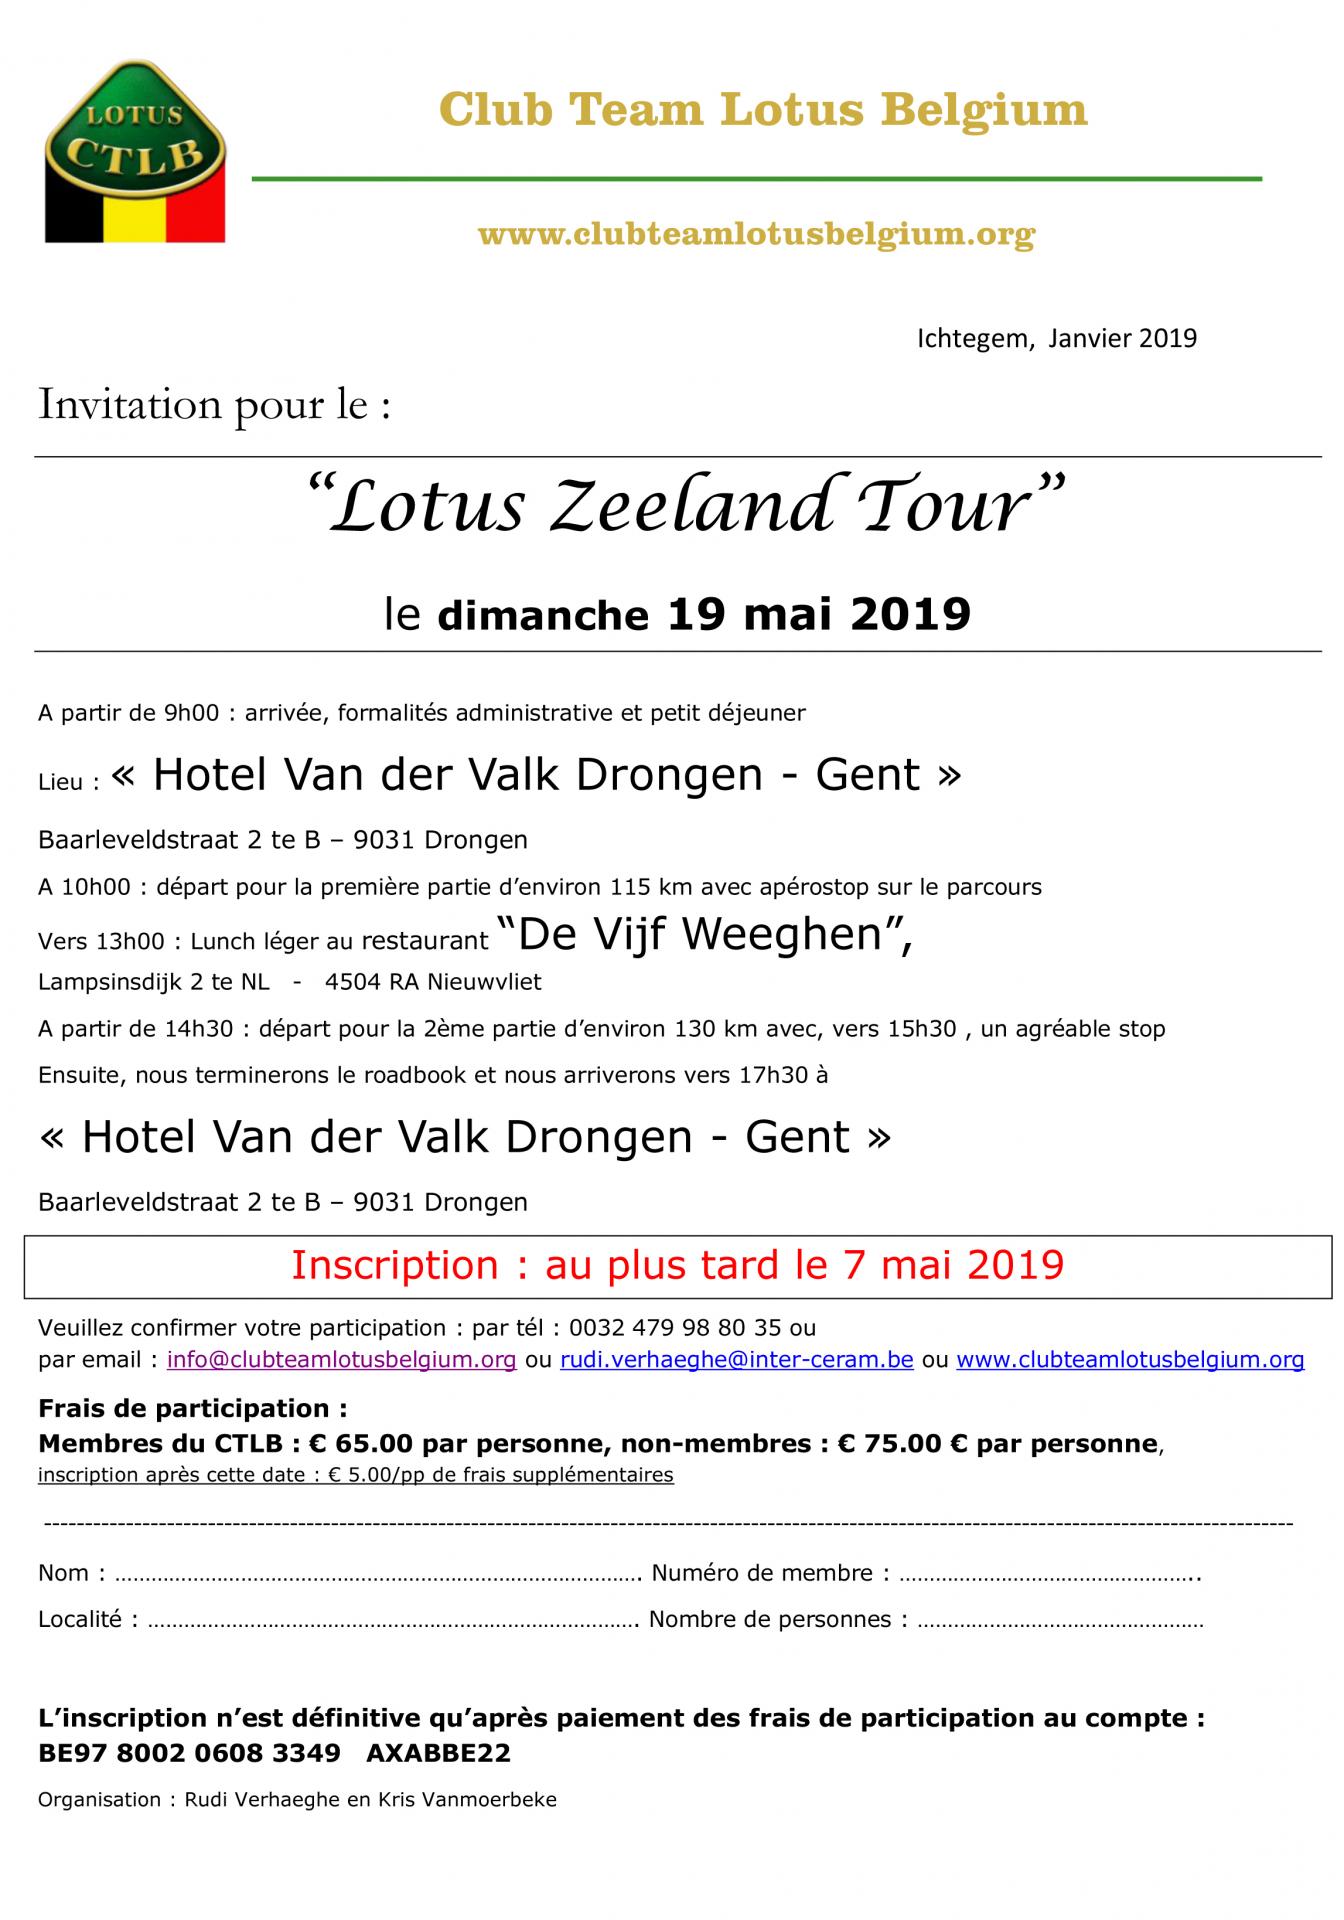 Invitation lotus zeeland tour